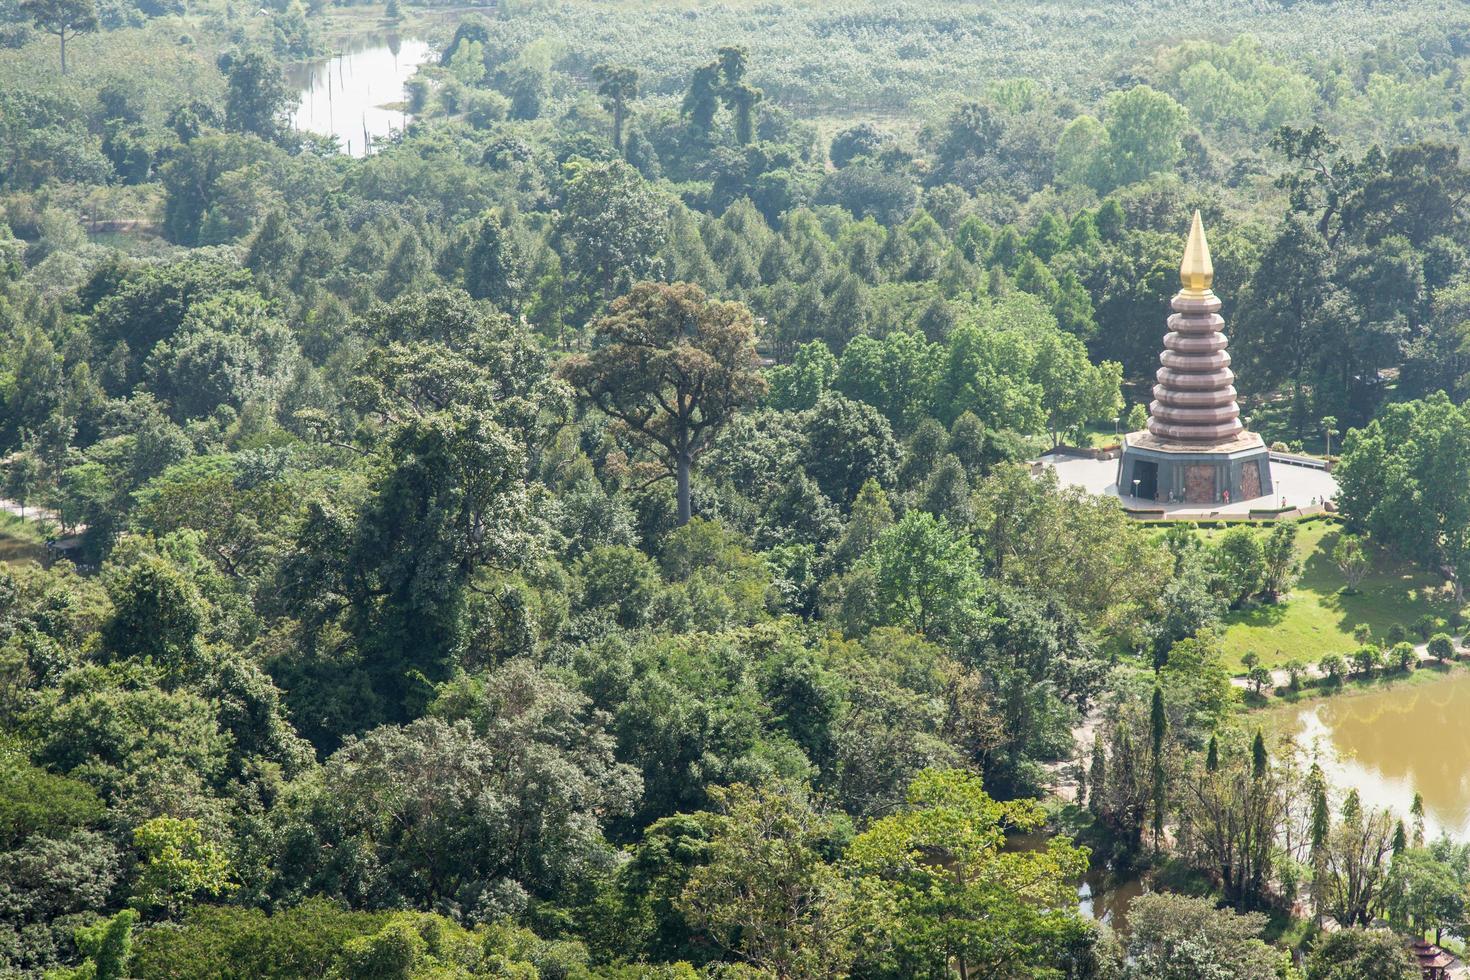 gran pagoda en medio de la jungla foto